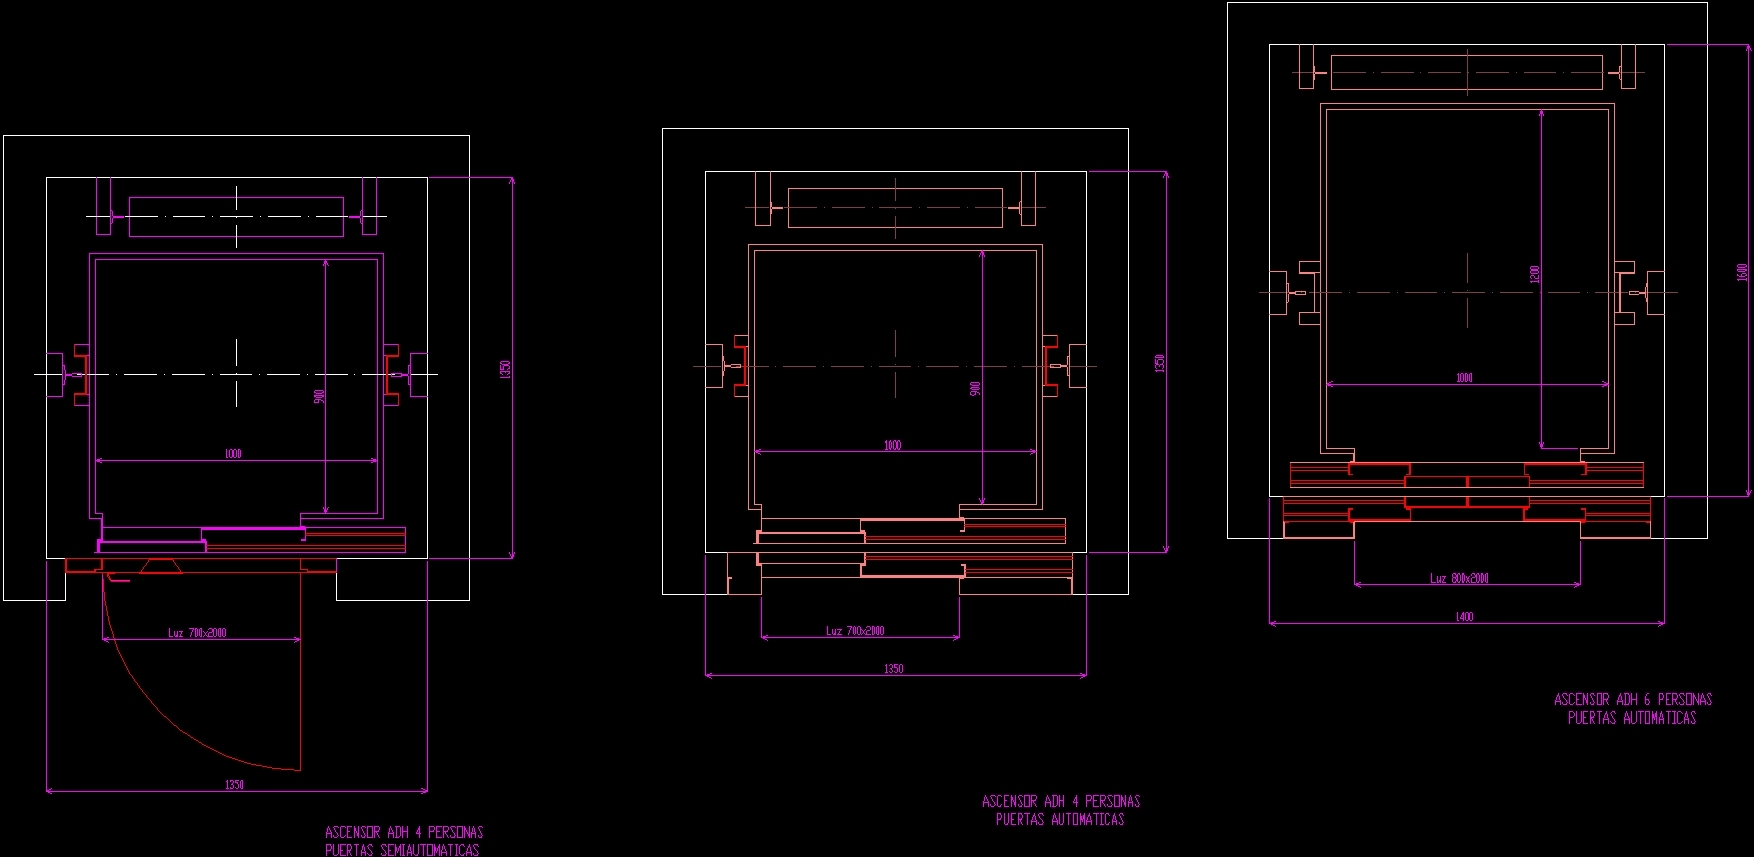  Elevator  DWG Block  for AutoCAD   Designs CAD